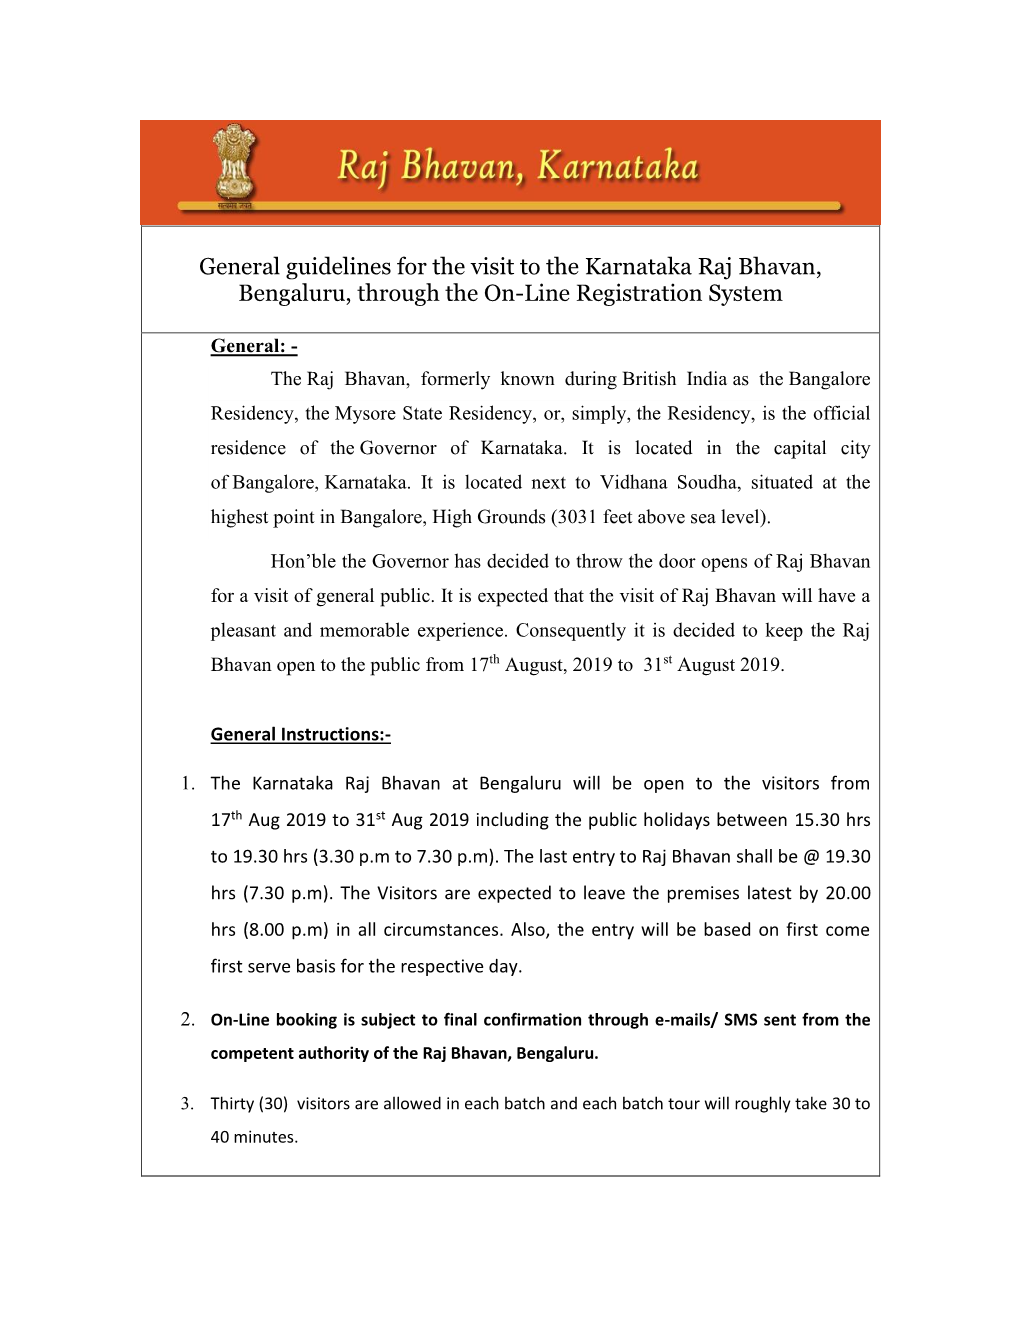 General Guidelines for the Visit to the Karnataka Raj Bhavan, Bengaluru, Through the On-Line Registration System